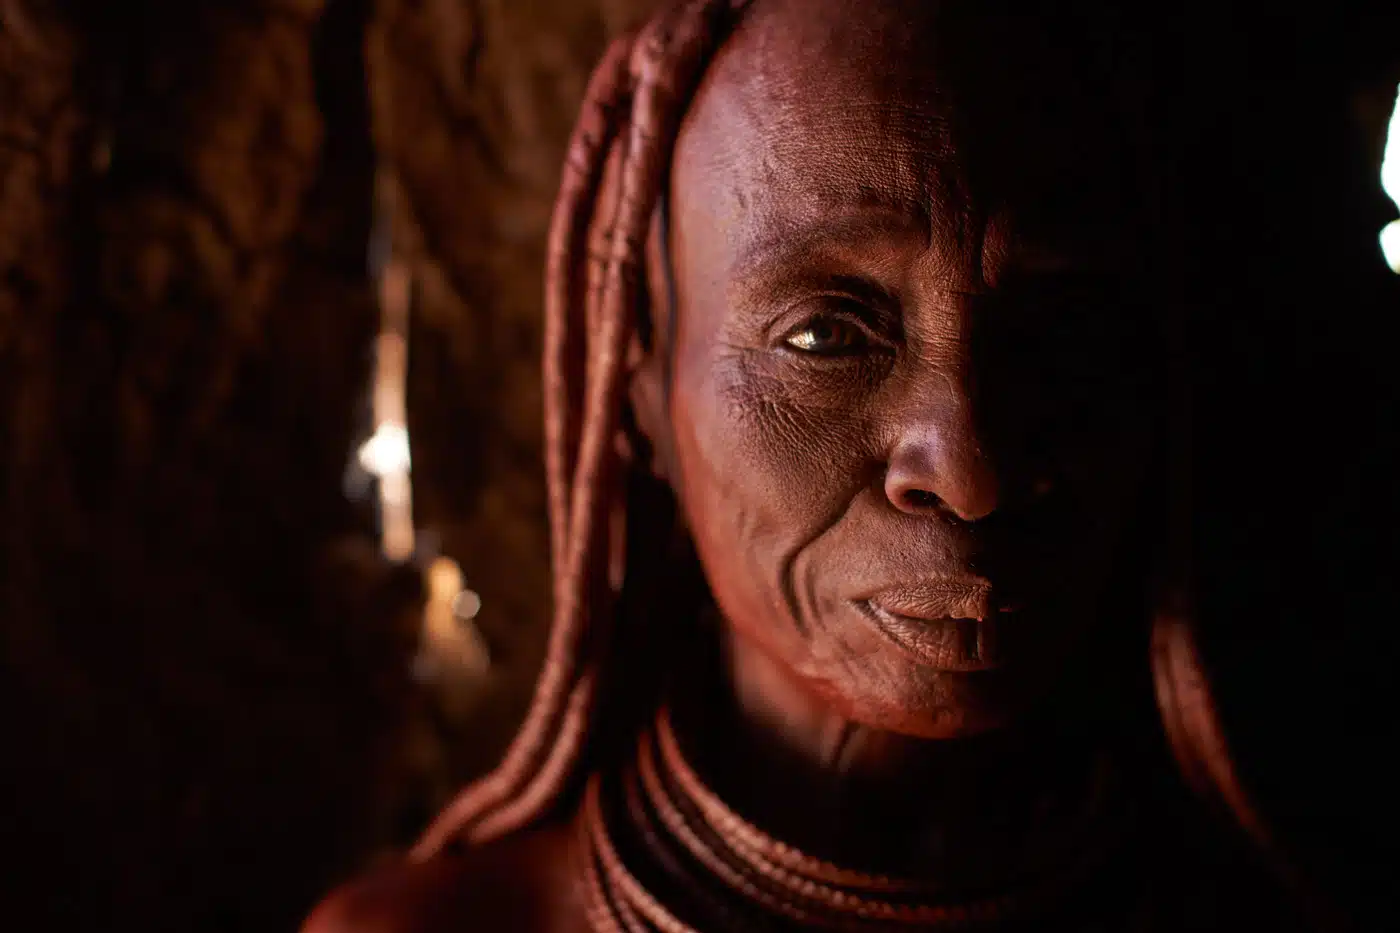 Portrait Of An Old Himba Traditional Woman, Oncocua, Angola